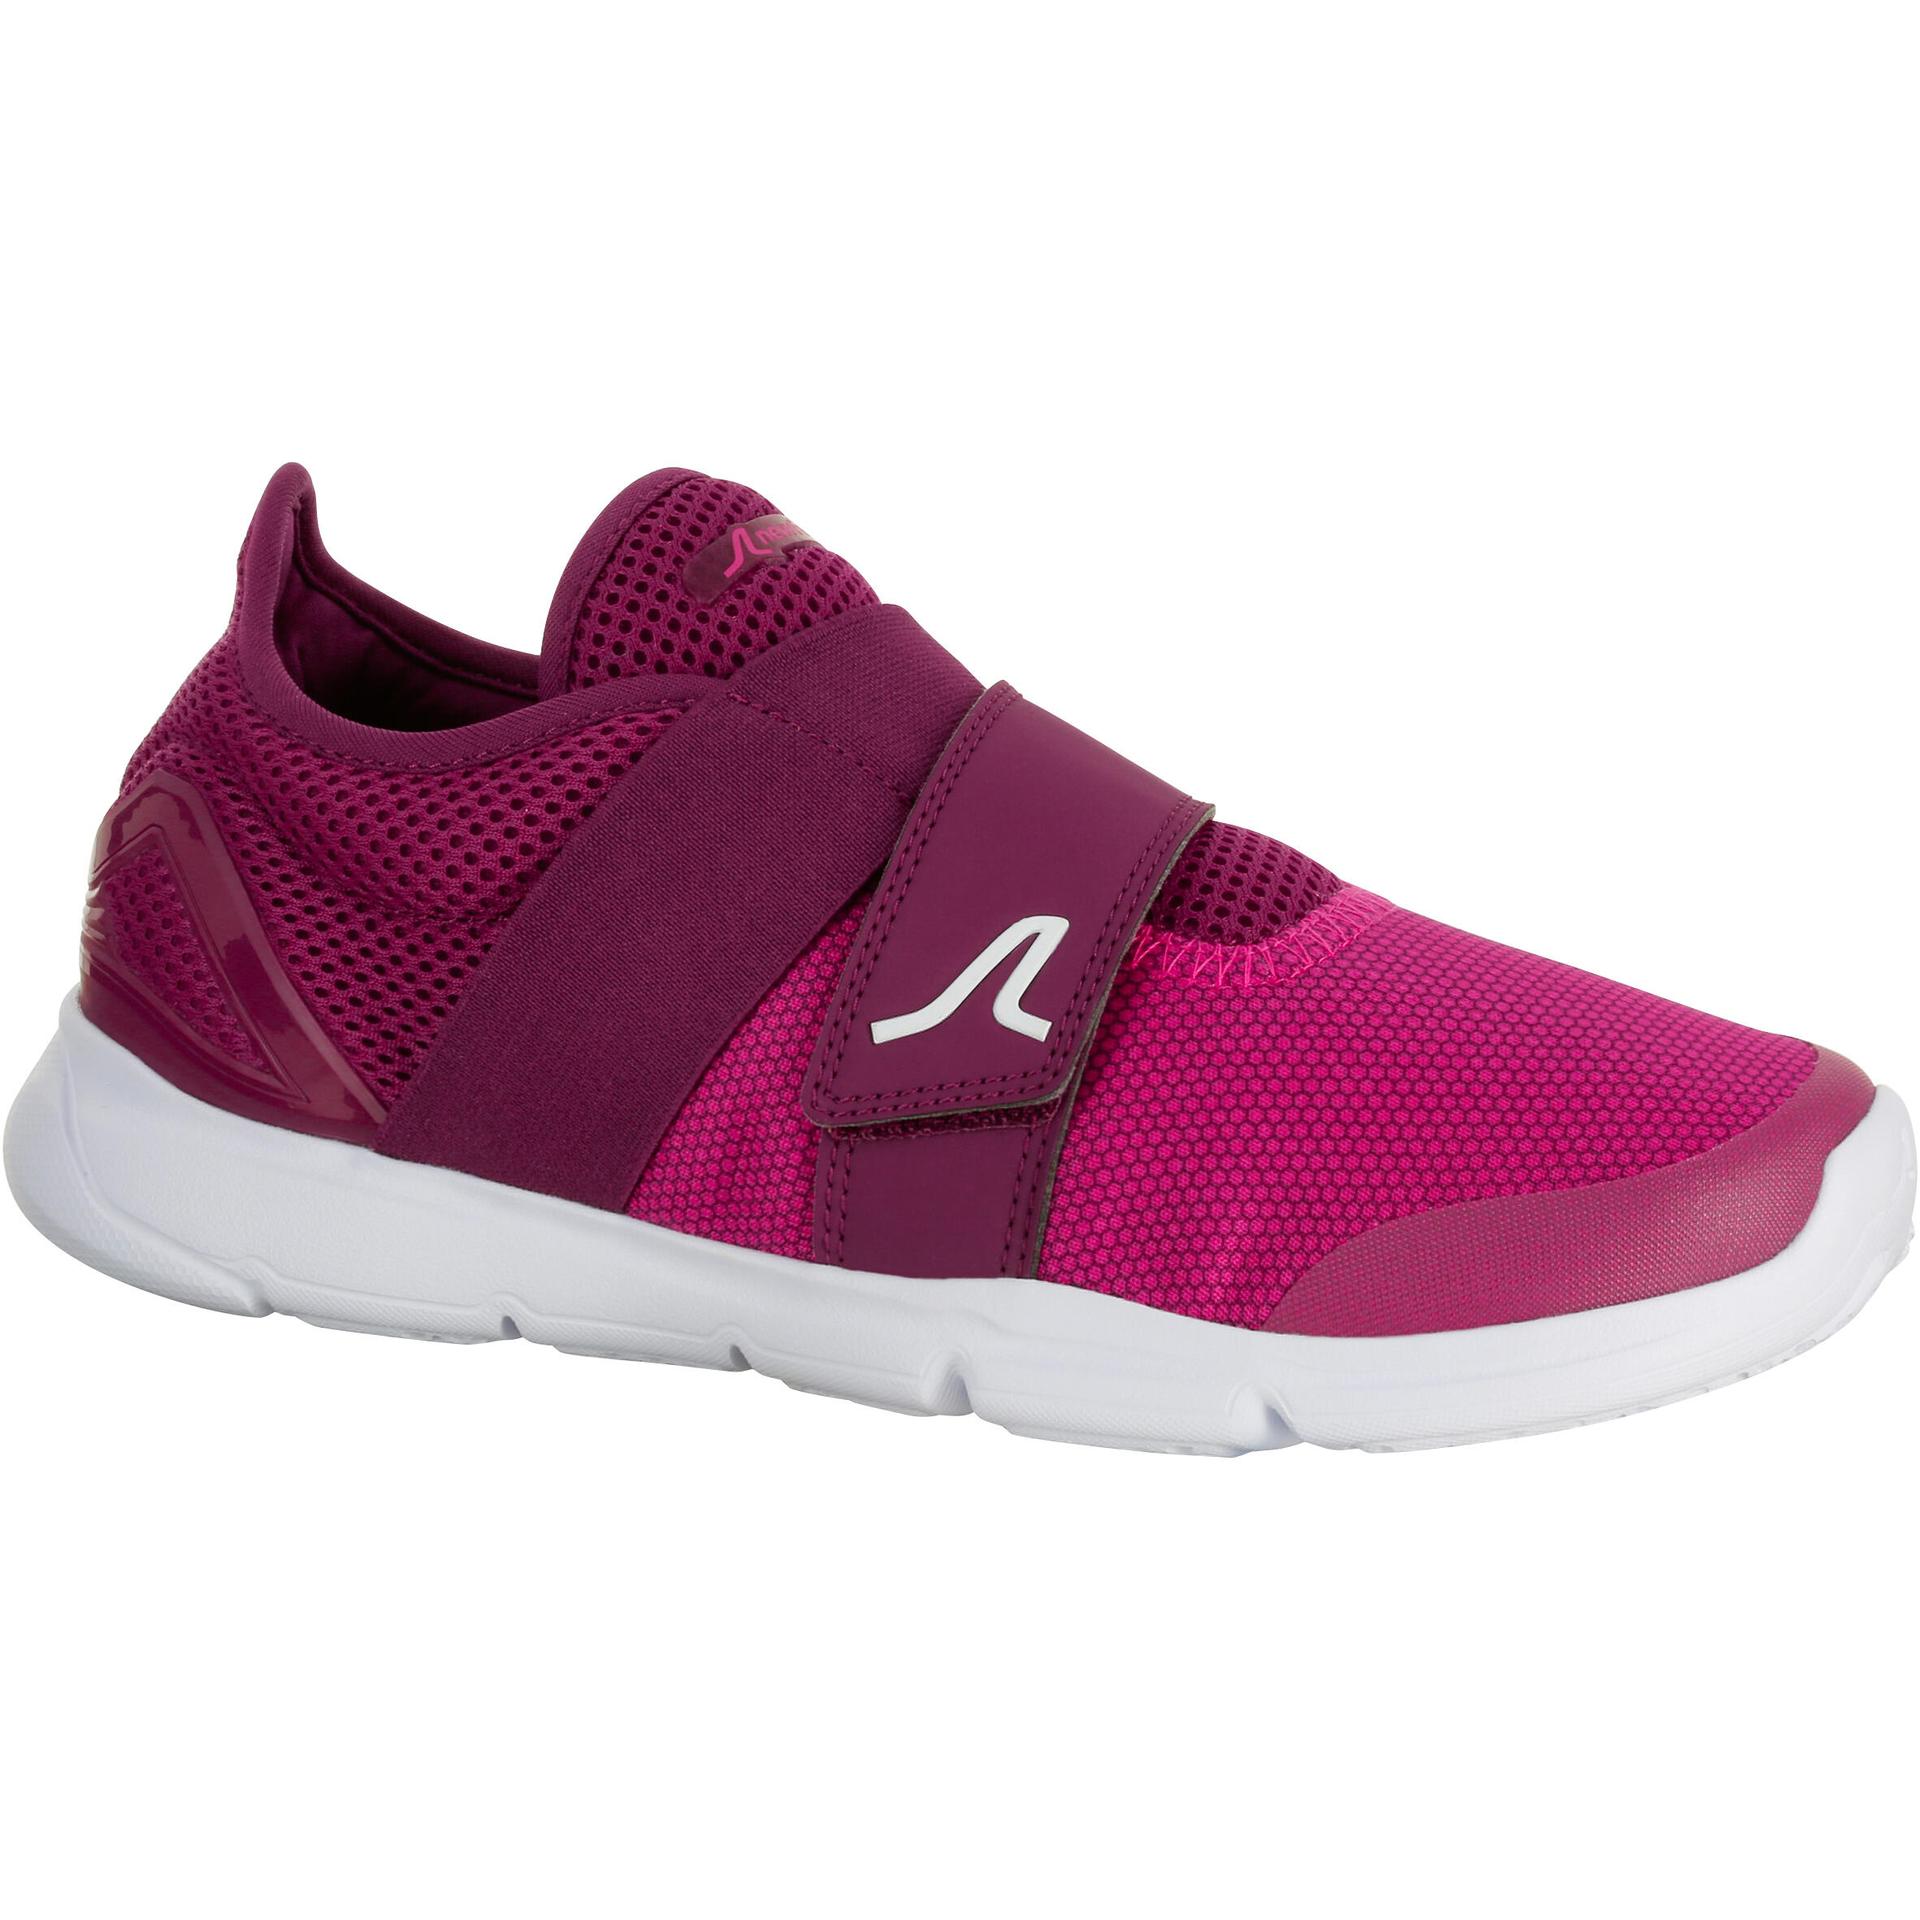 walking-shoes-for-women-soft-180---purple/pink